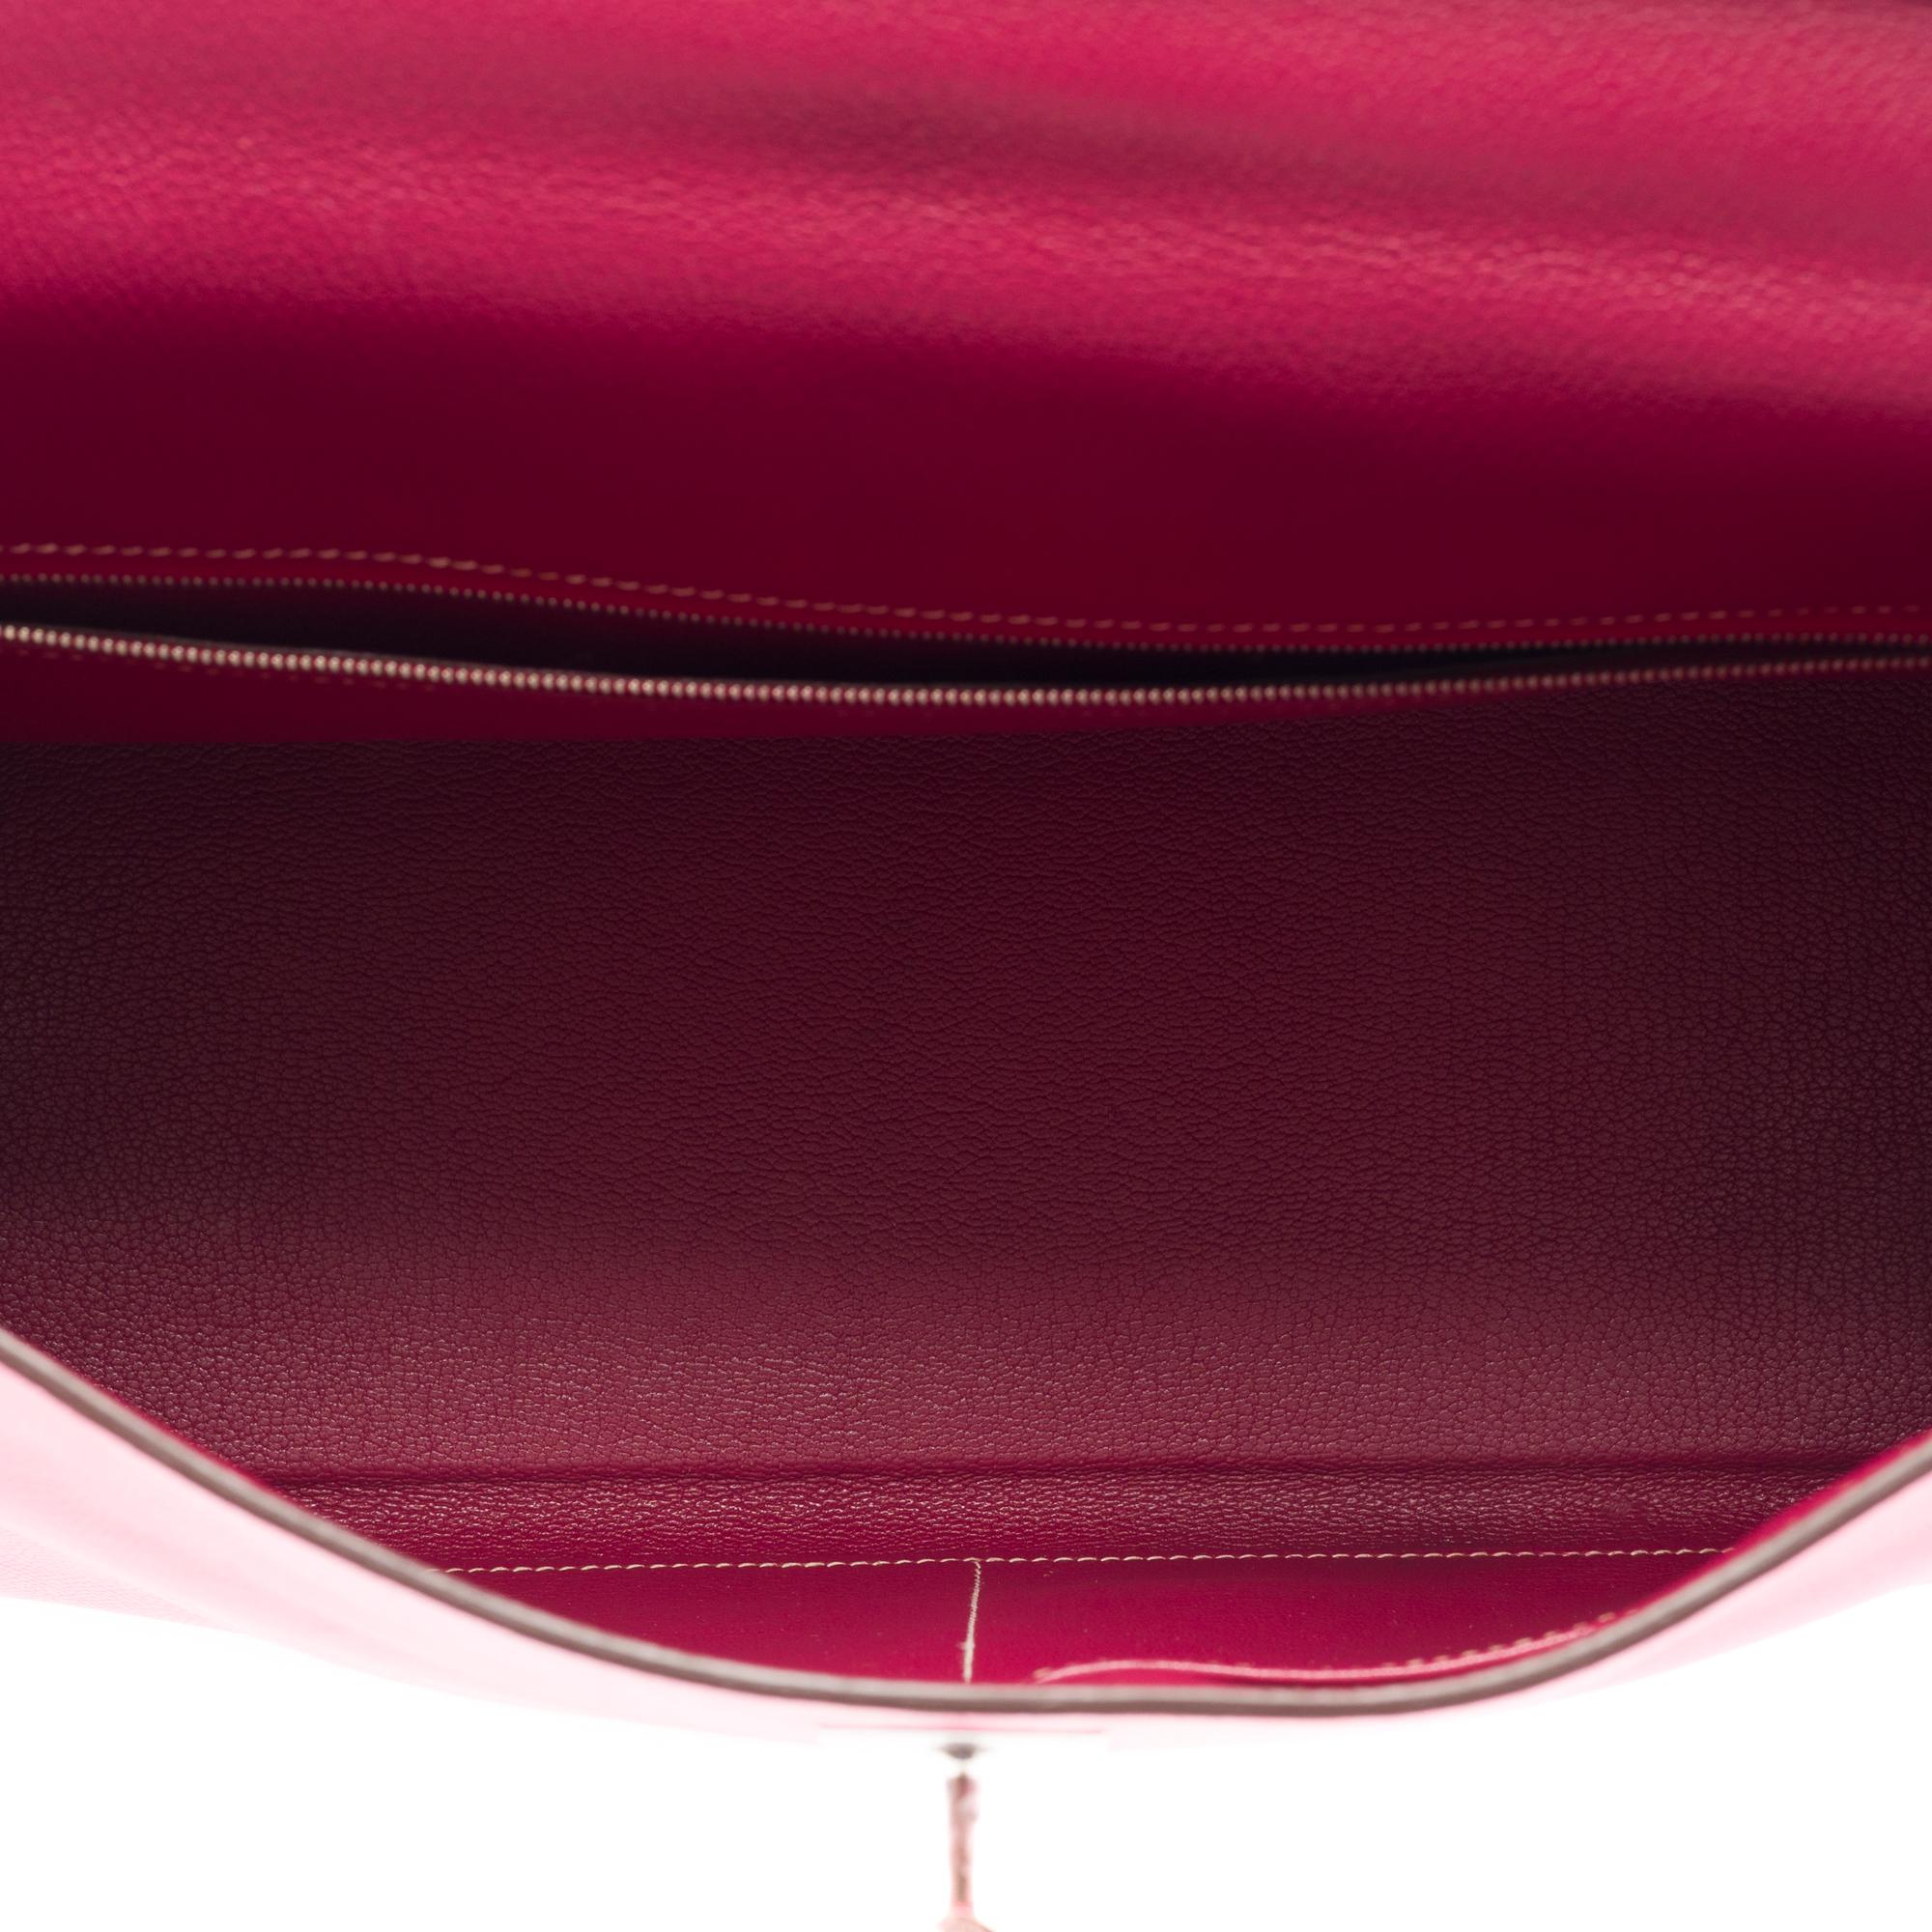 Candy Edition Hermès Kelly 35 retourne handbag strap in Pink Epsom leather, SHW 3